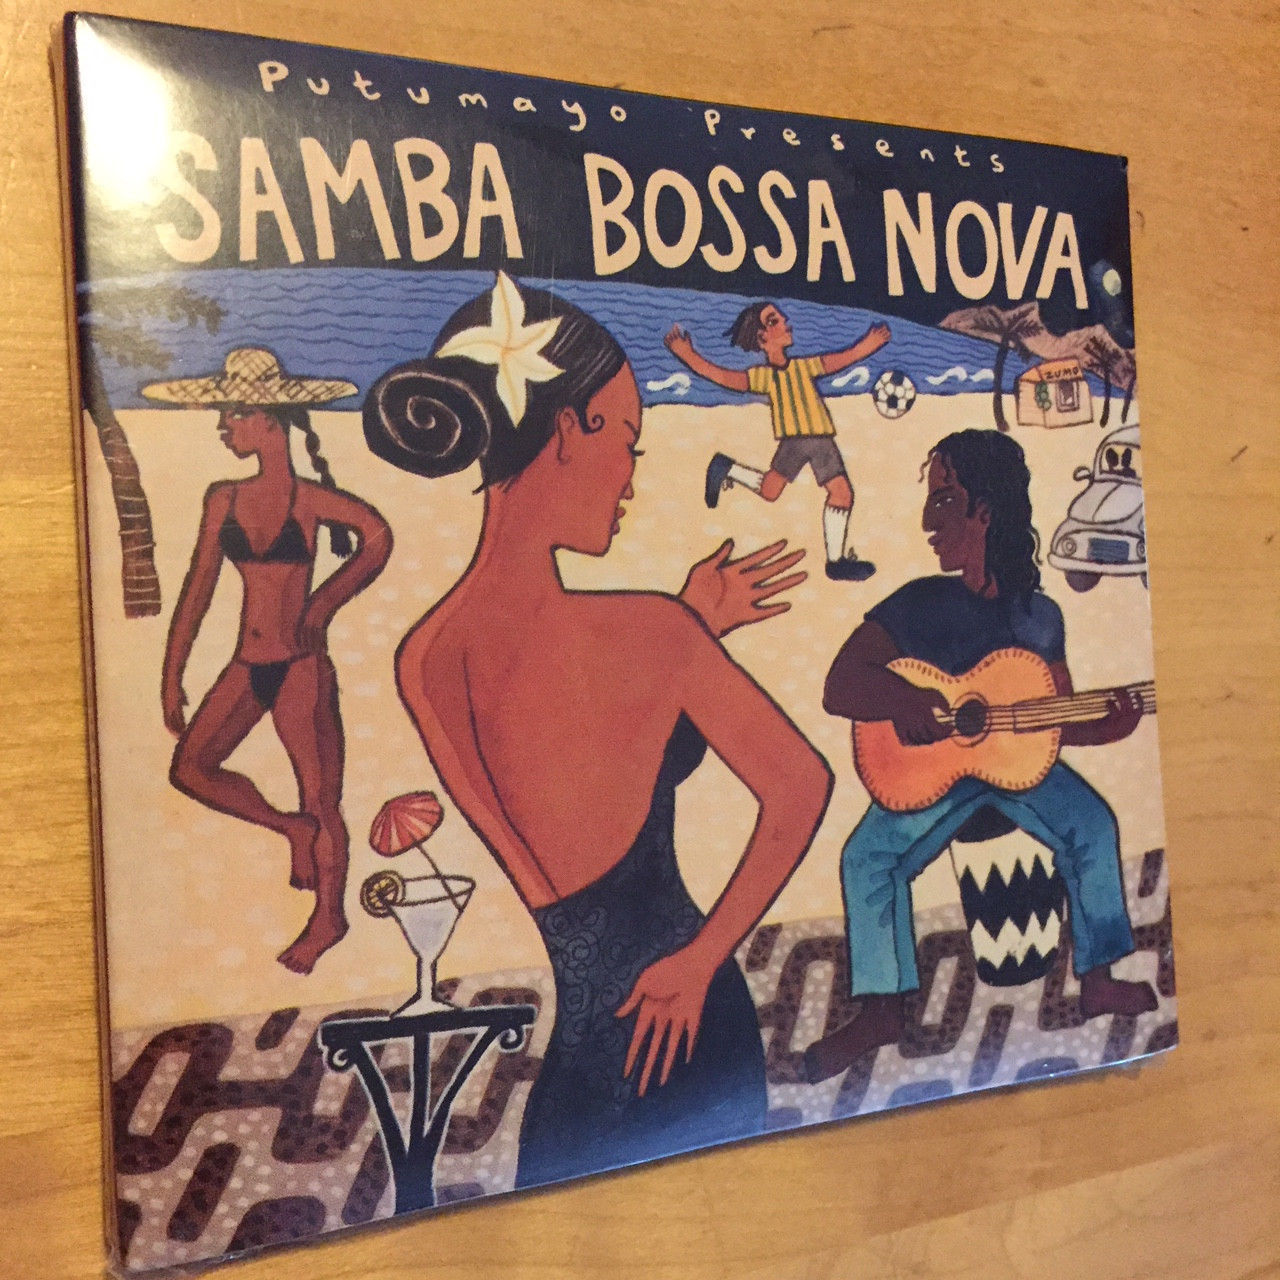 putumayo presents samba bossa nova rar